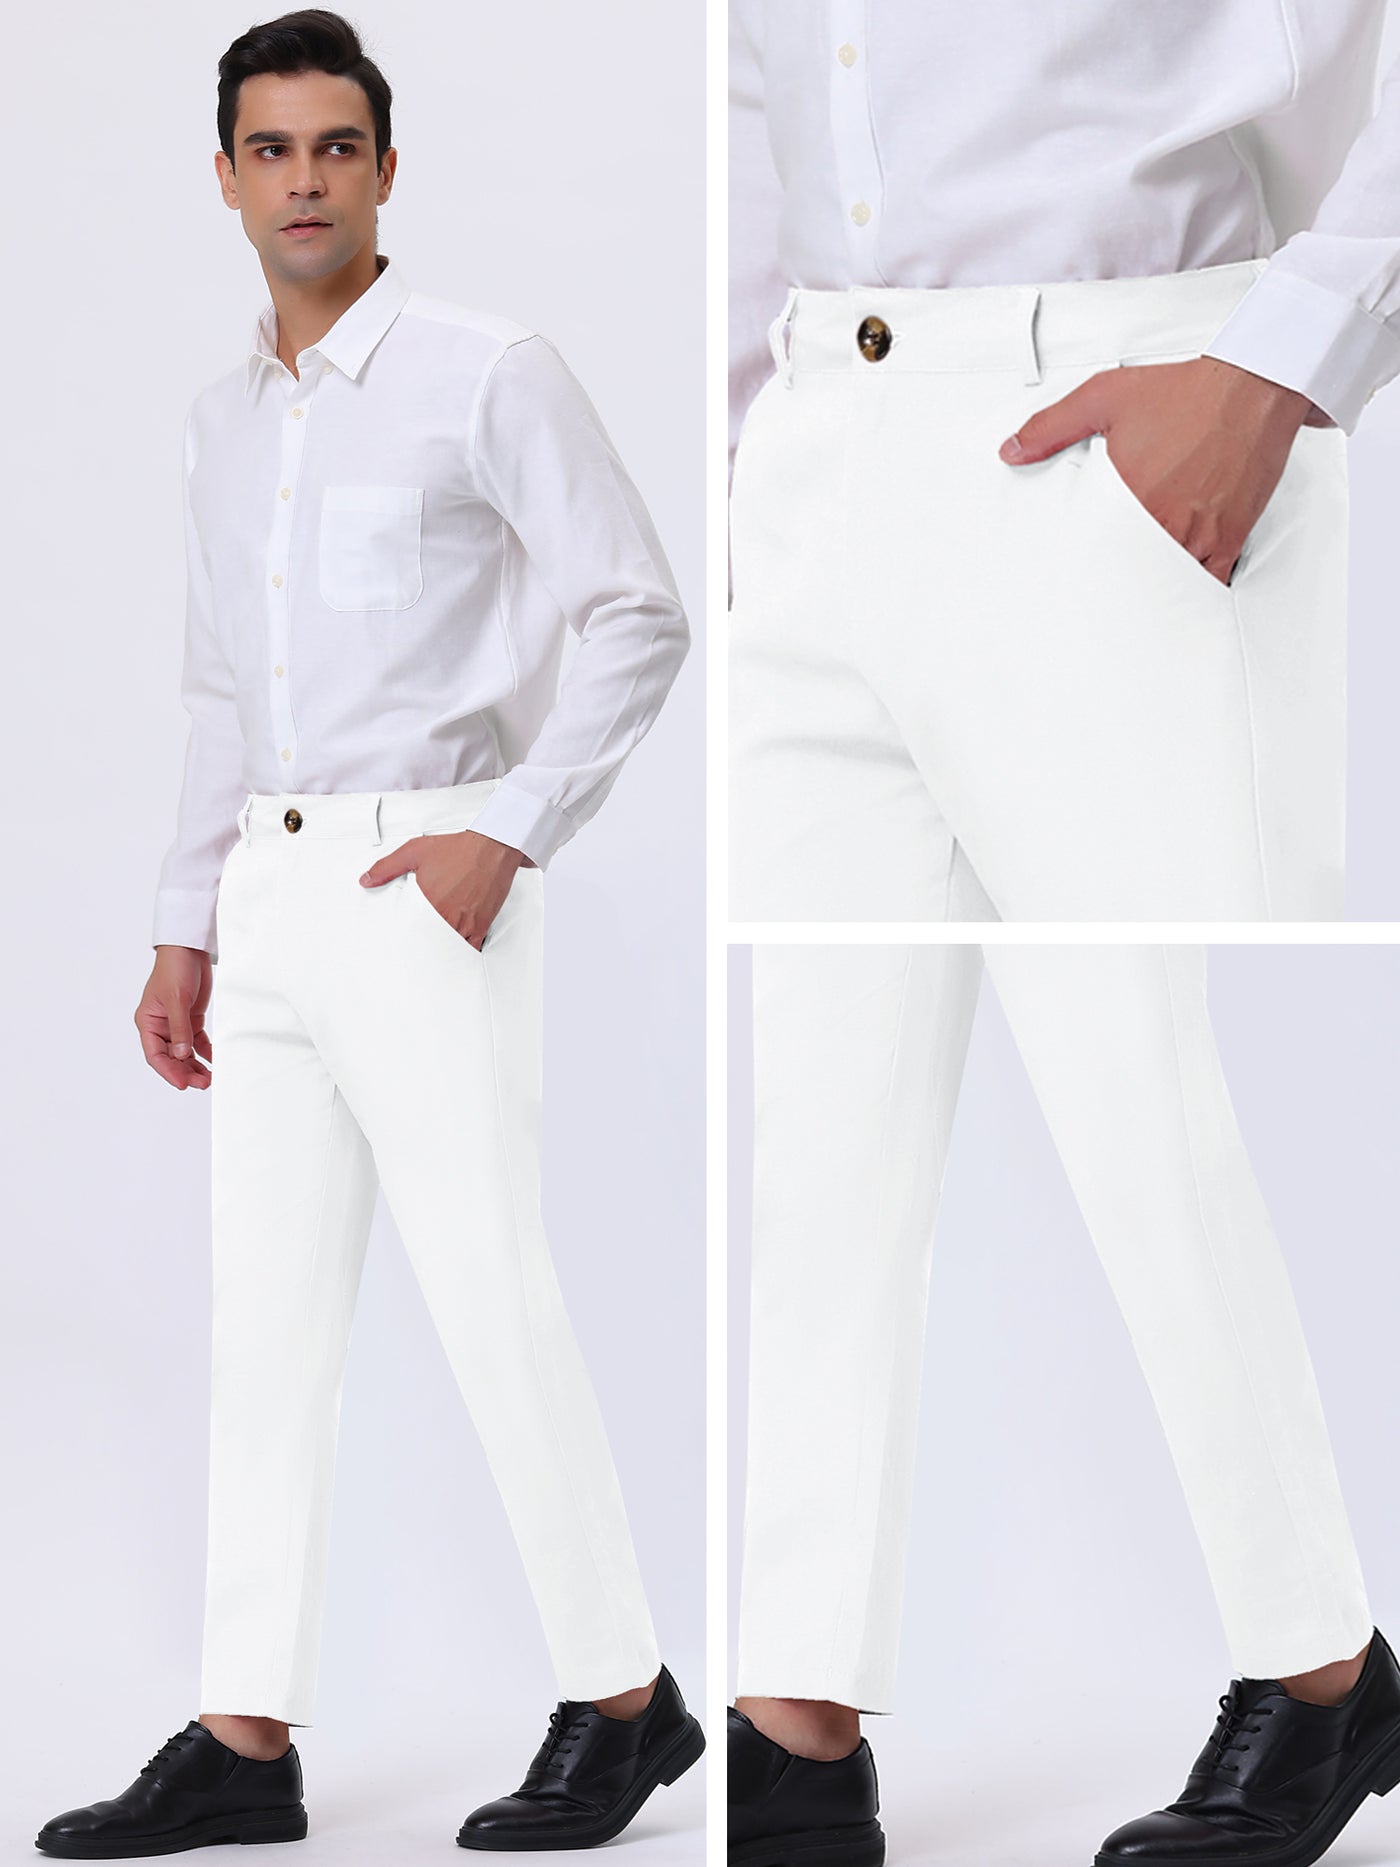 Bublédon Men's Solid Color Slacks Straight Fit Flat Front Chino Dress Pants